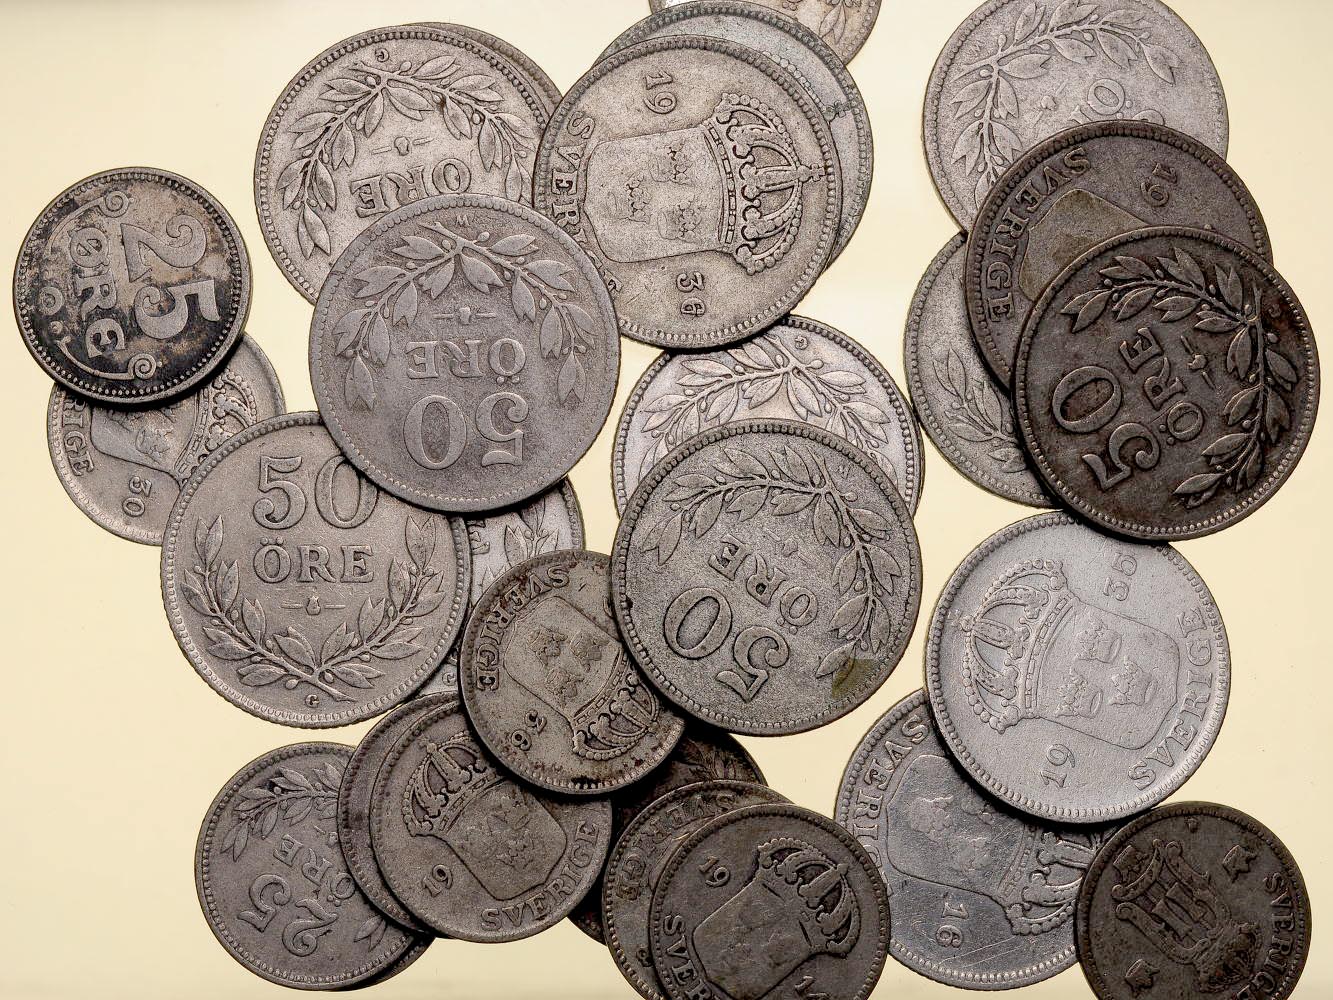 Szwecja, 50 & 35 ore, srebro, 2 uncje czystego srebra, junk silver